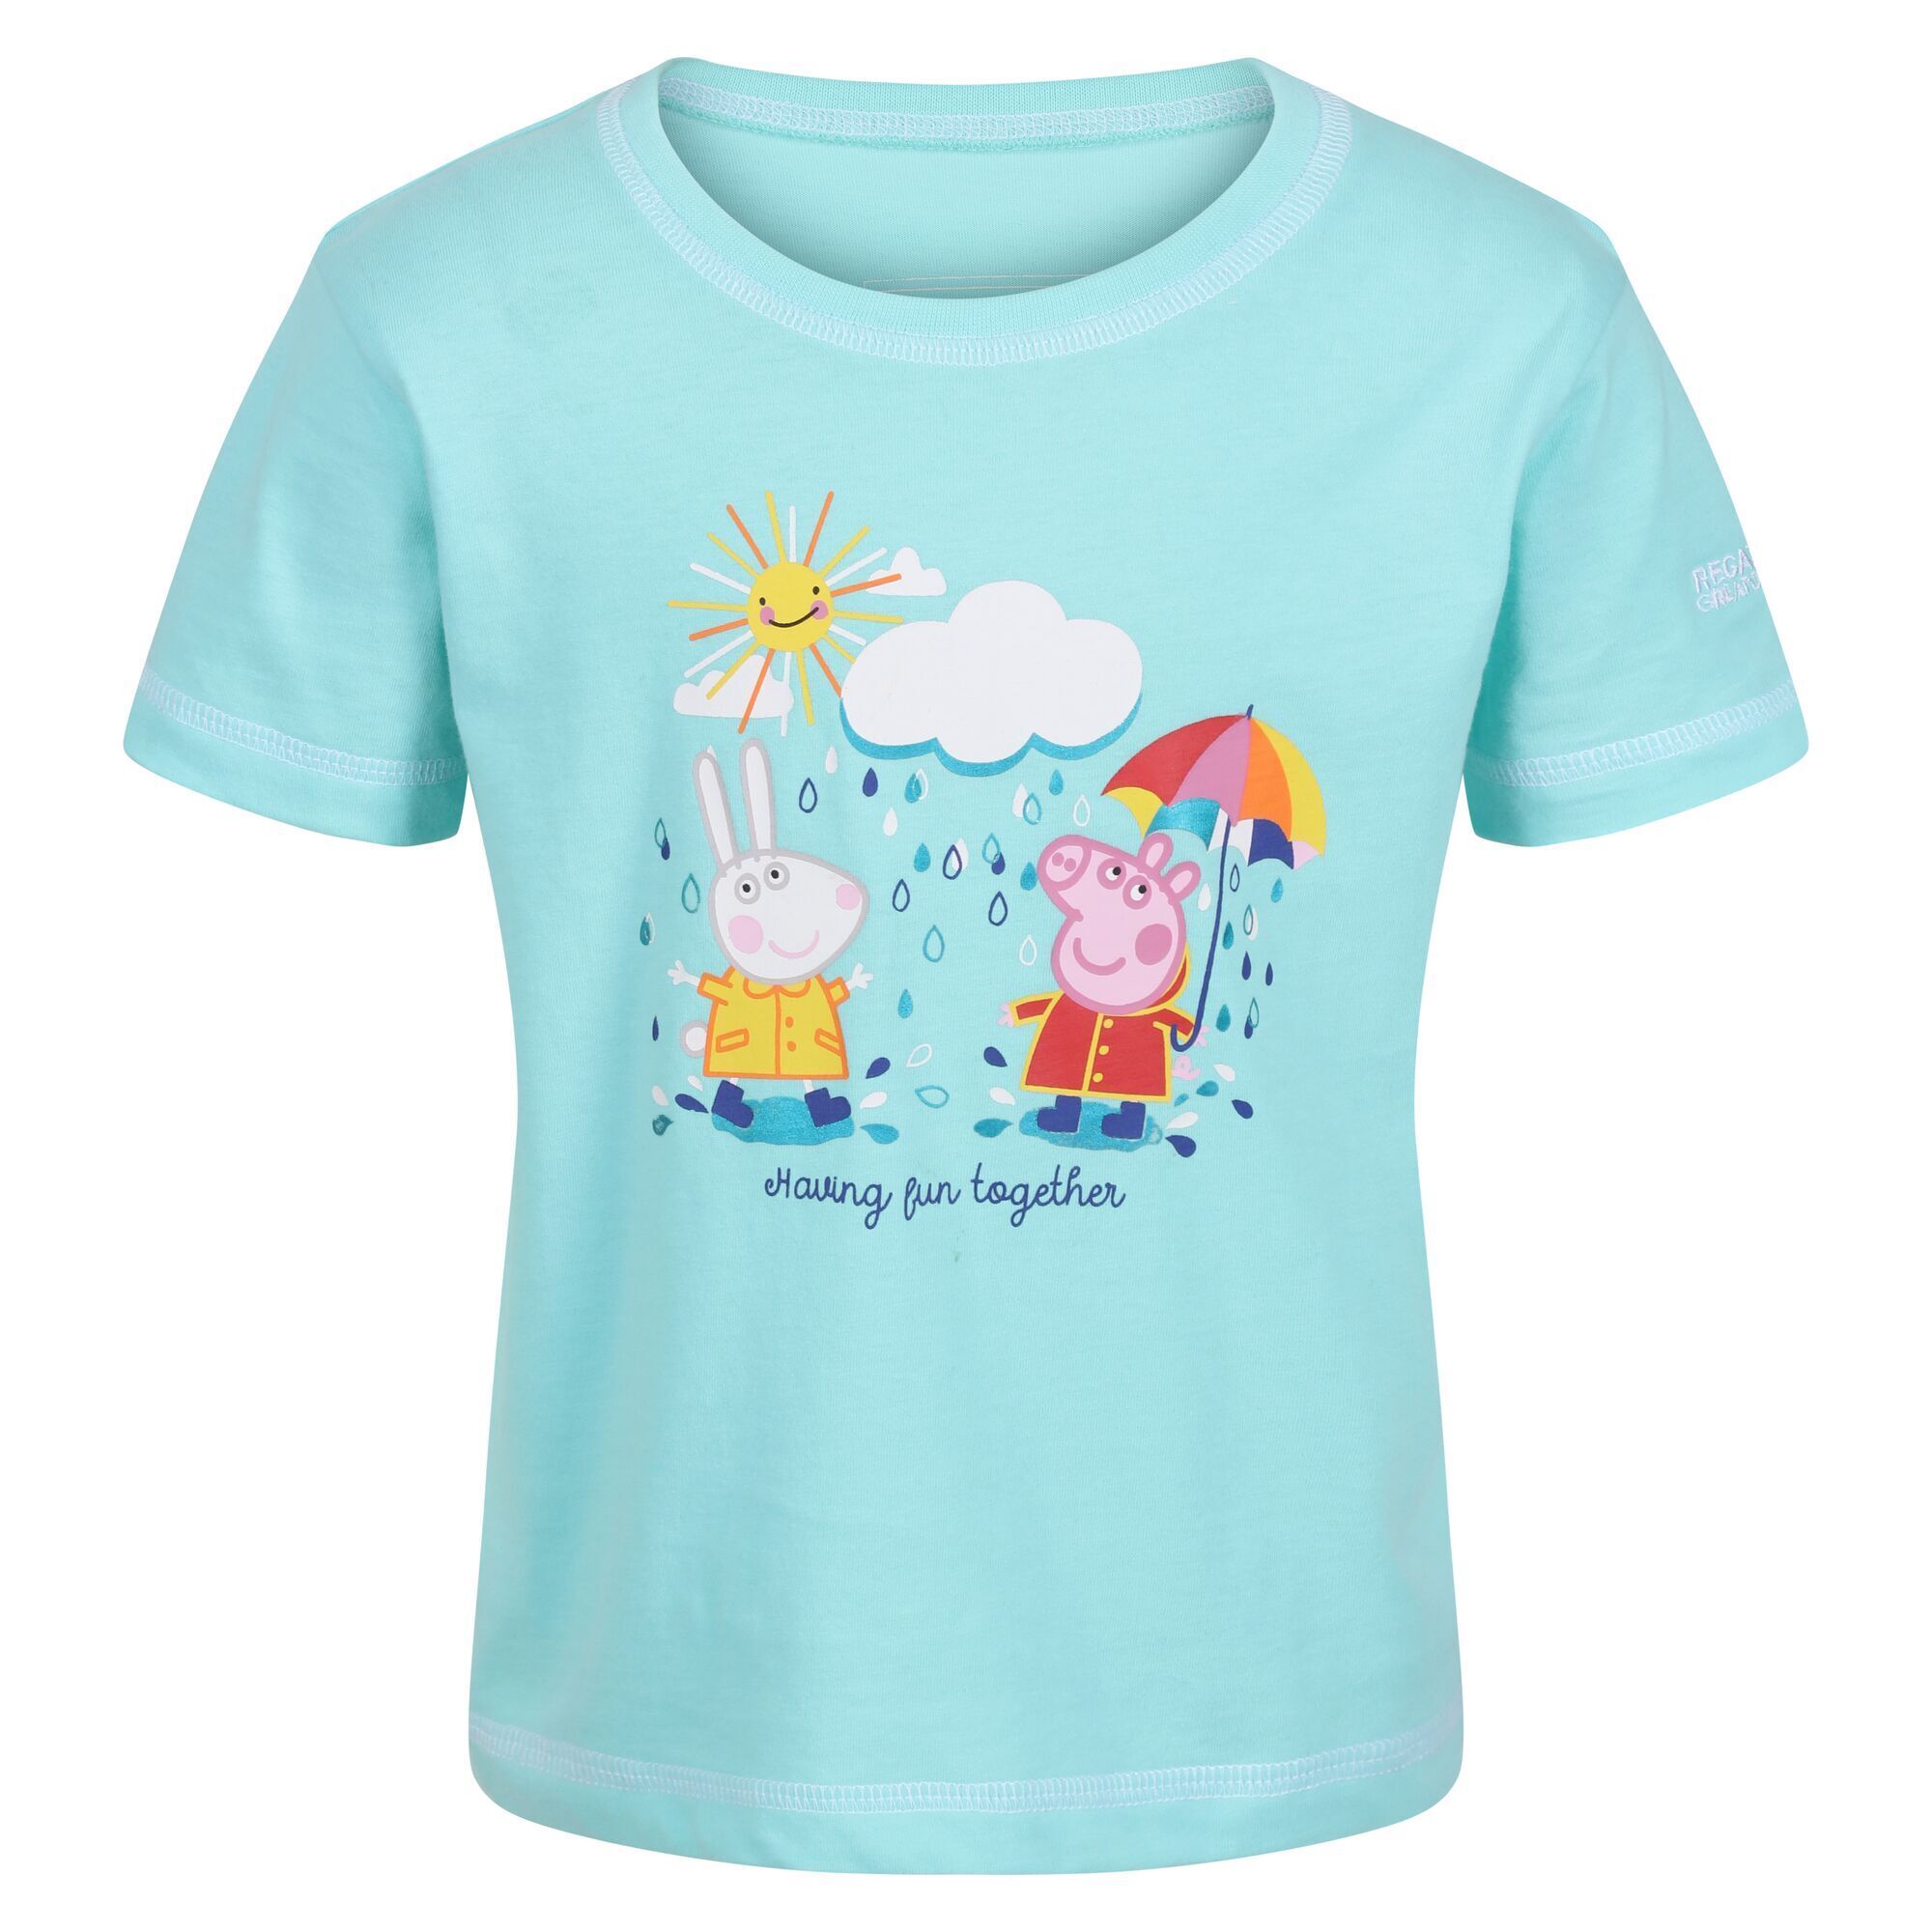 regatta kinder/kids peppa pig bedrukt t-shirt